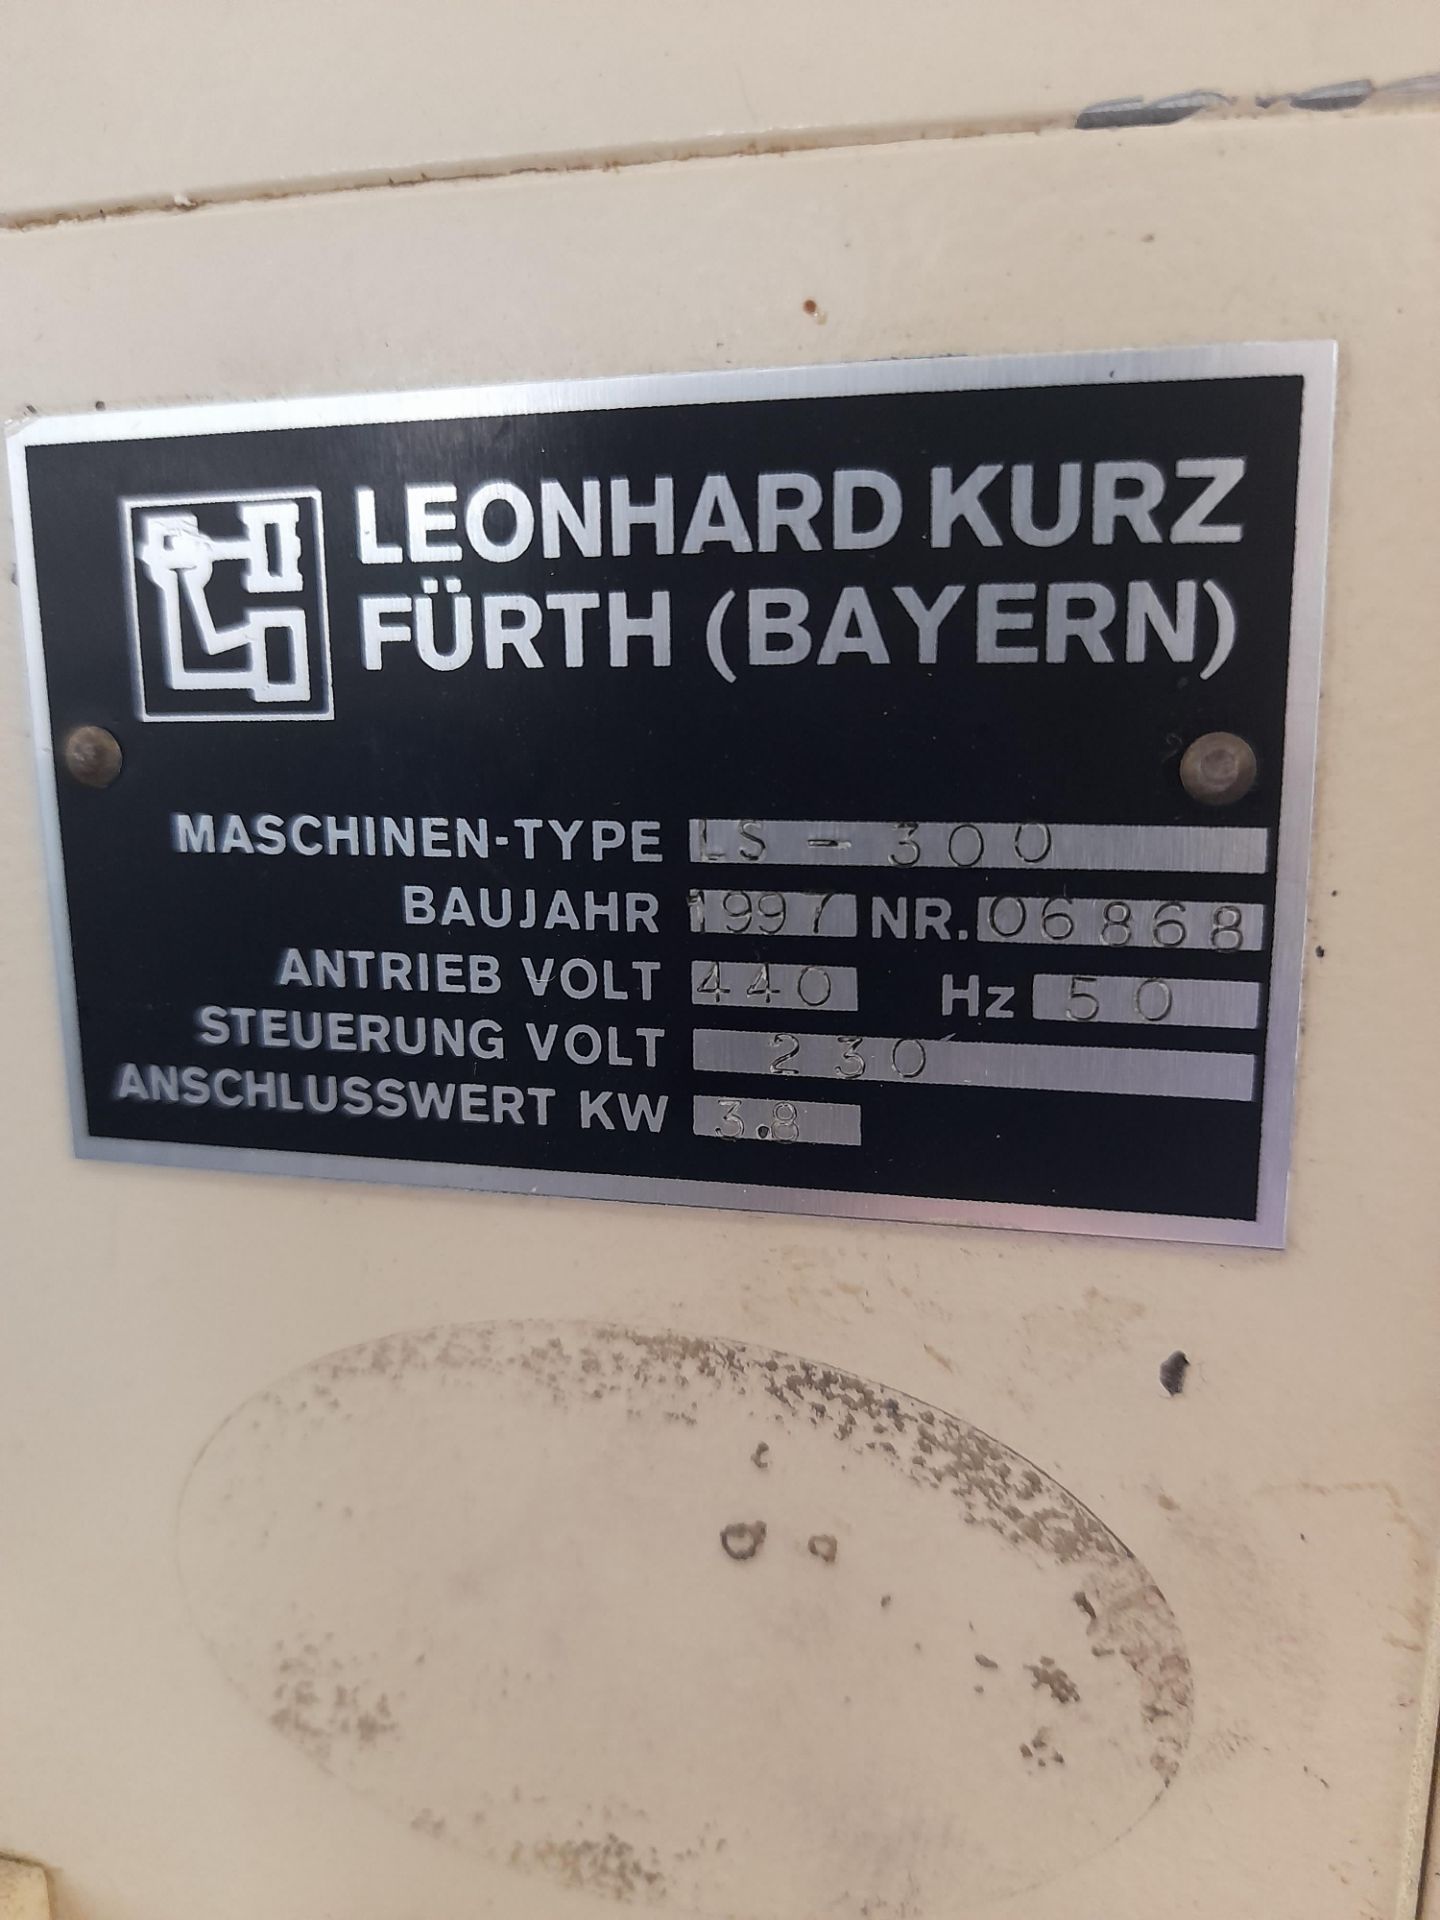 Leonhard Kurz L1-300 Drum Foiler, year of manufacture 1997, serial number 06868 - Image 5 of 5